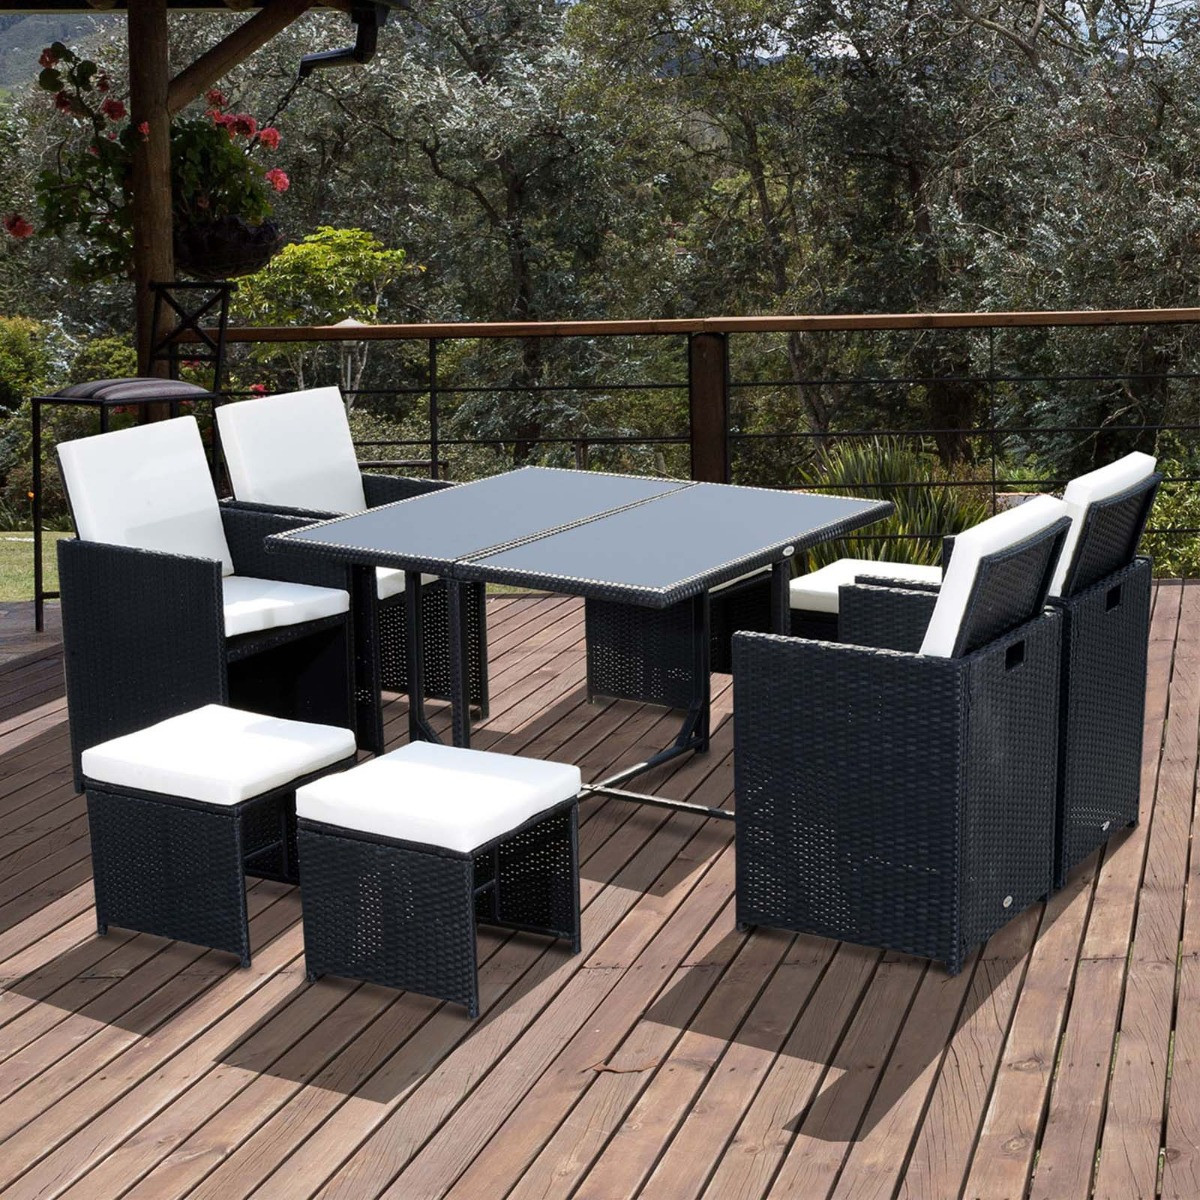 Outsunny Rattan Garden Furniture Cube Set, 8 Seater - Black>